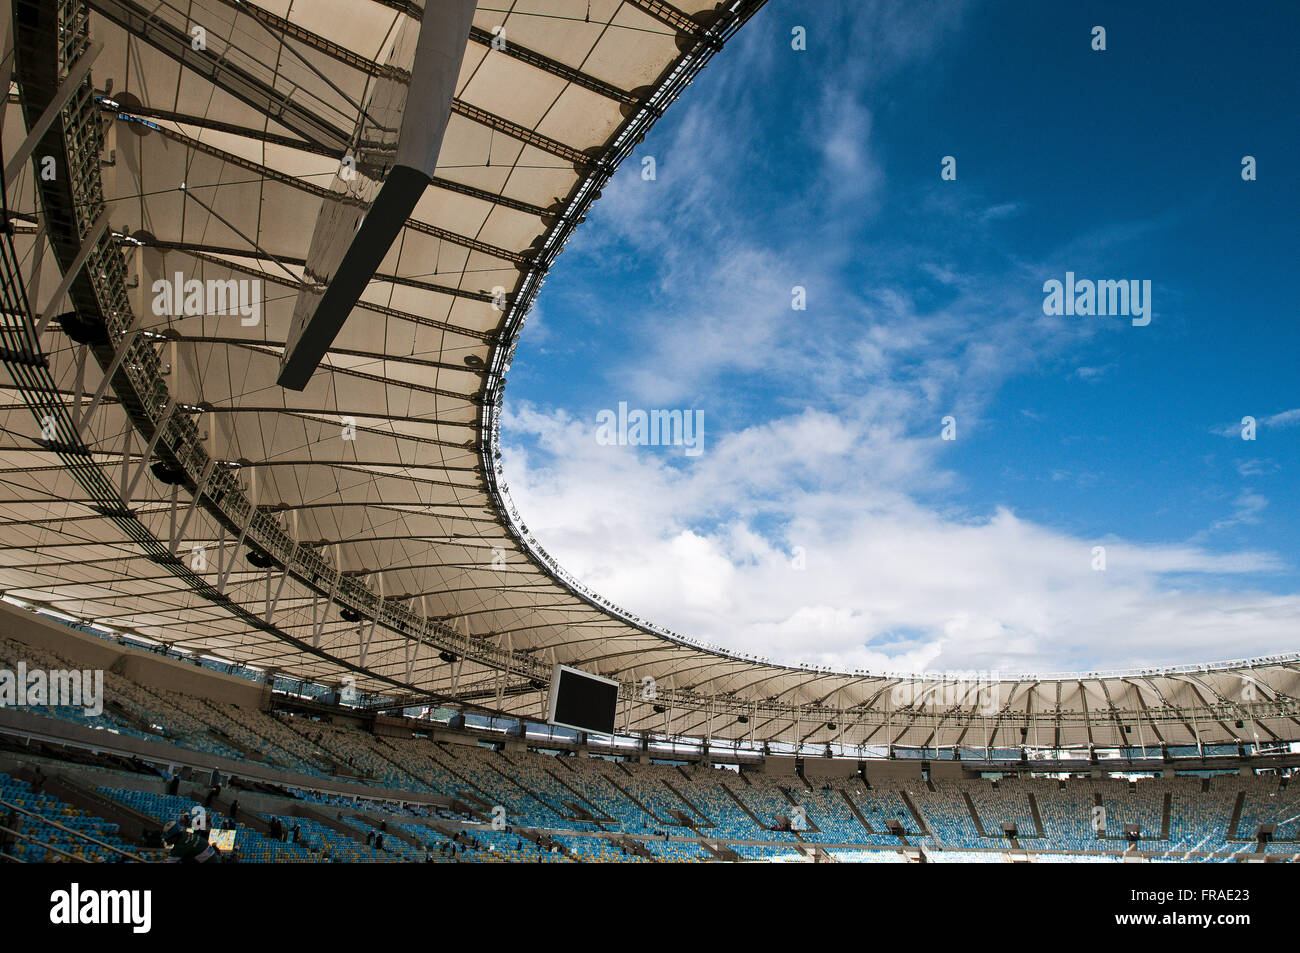 Estadio do Maracana renovated for the World Cup 2014 - Maracana neighborhood Stock Photo